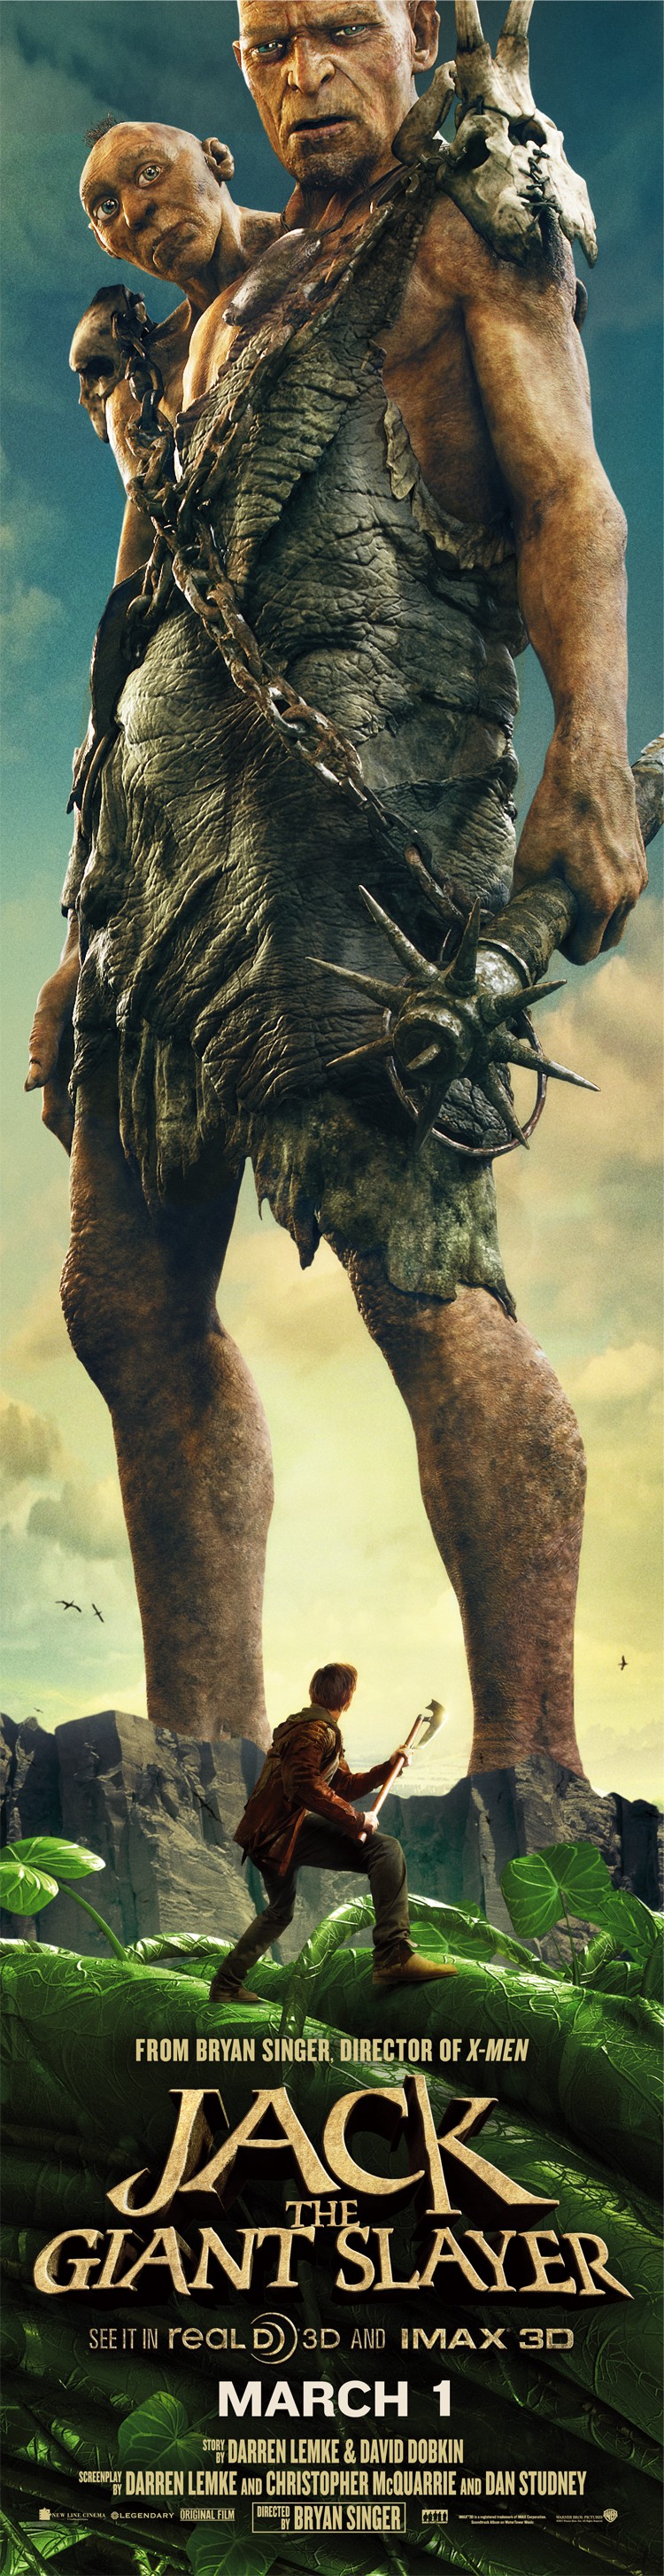 Mega Sized Movie Poster Image for Jack the Giant Slayer (#15 of 21)